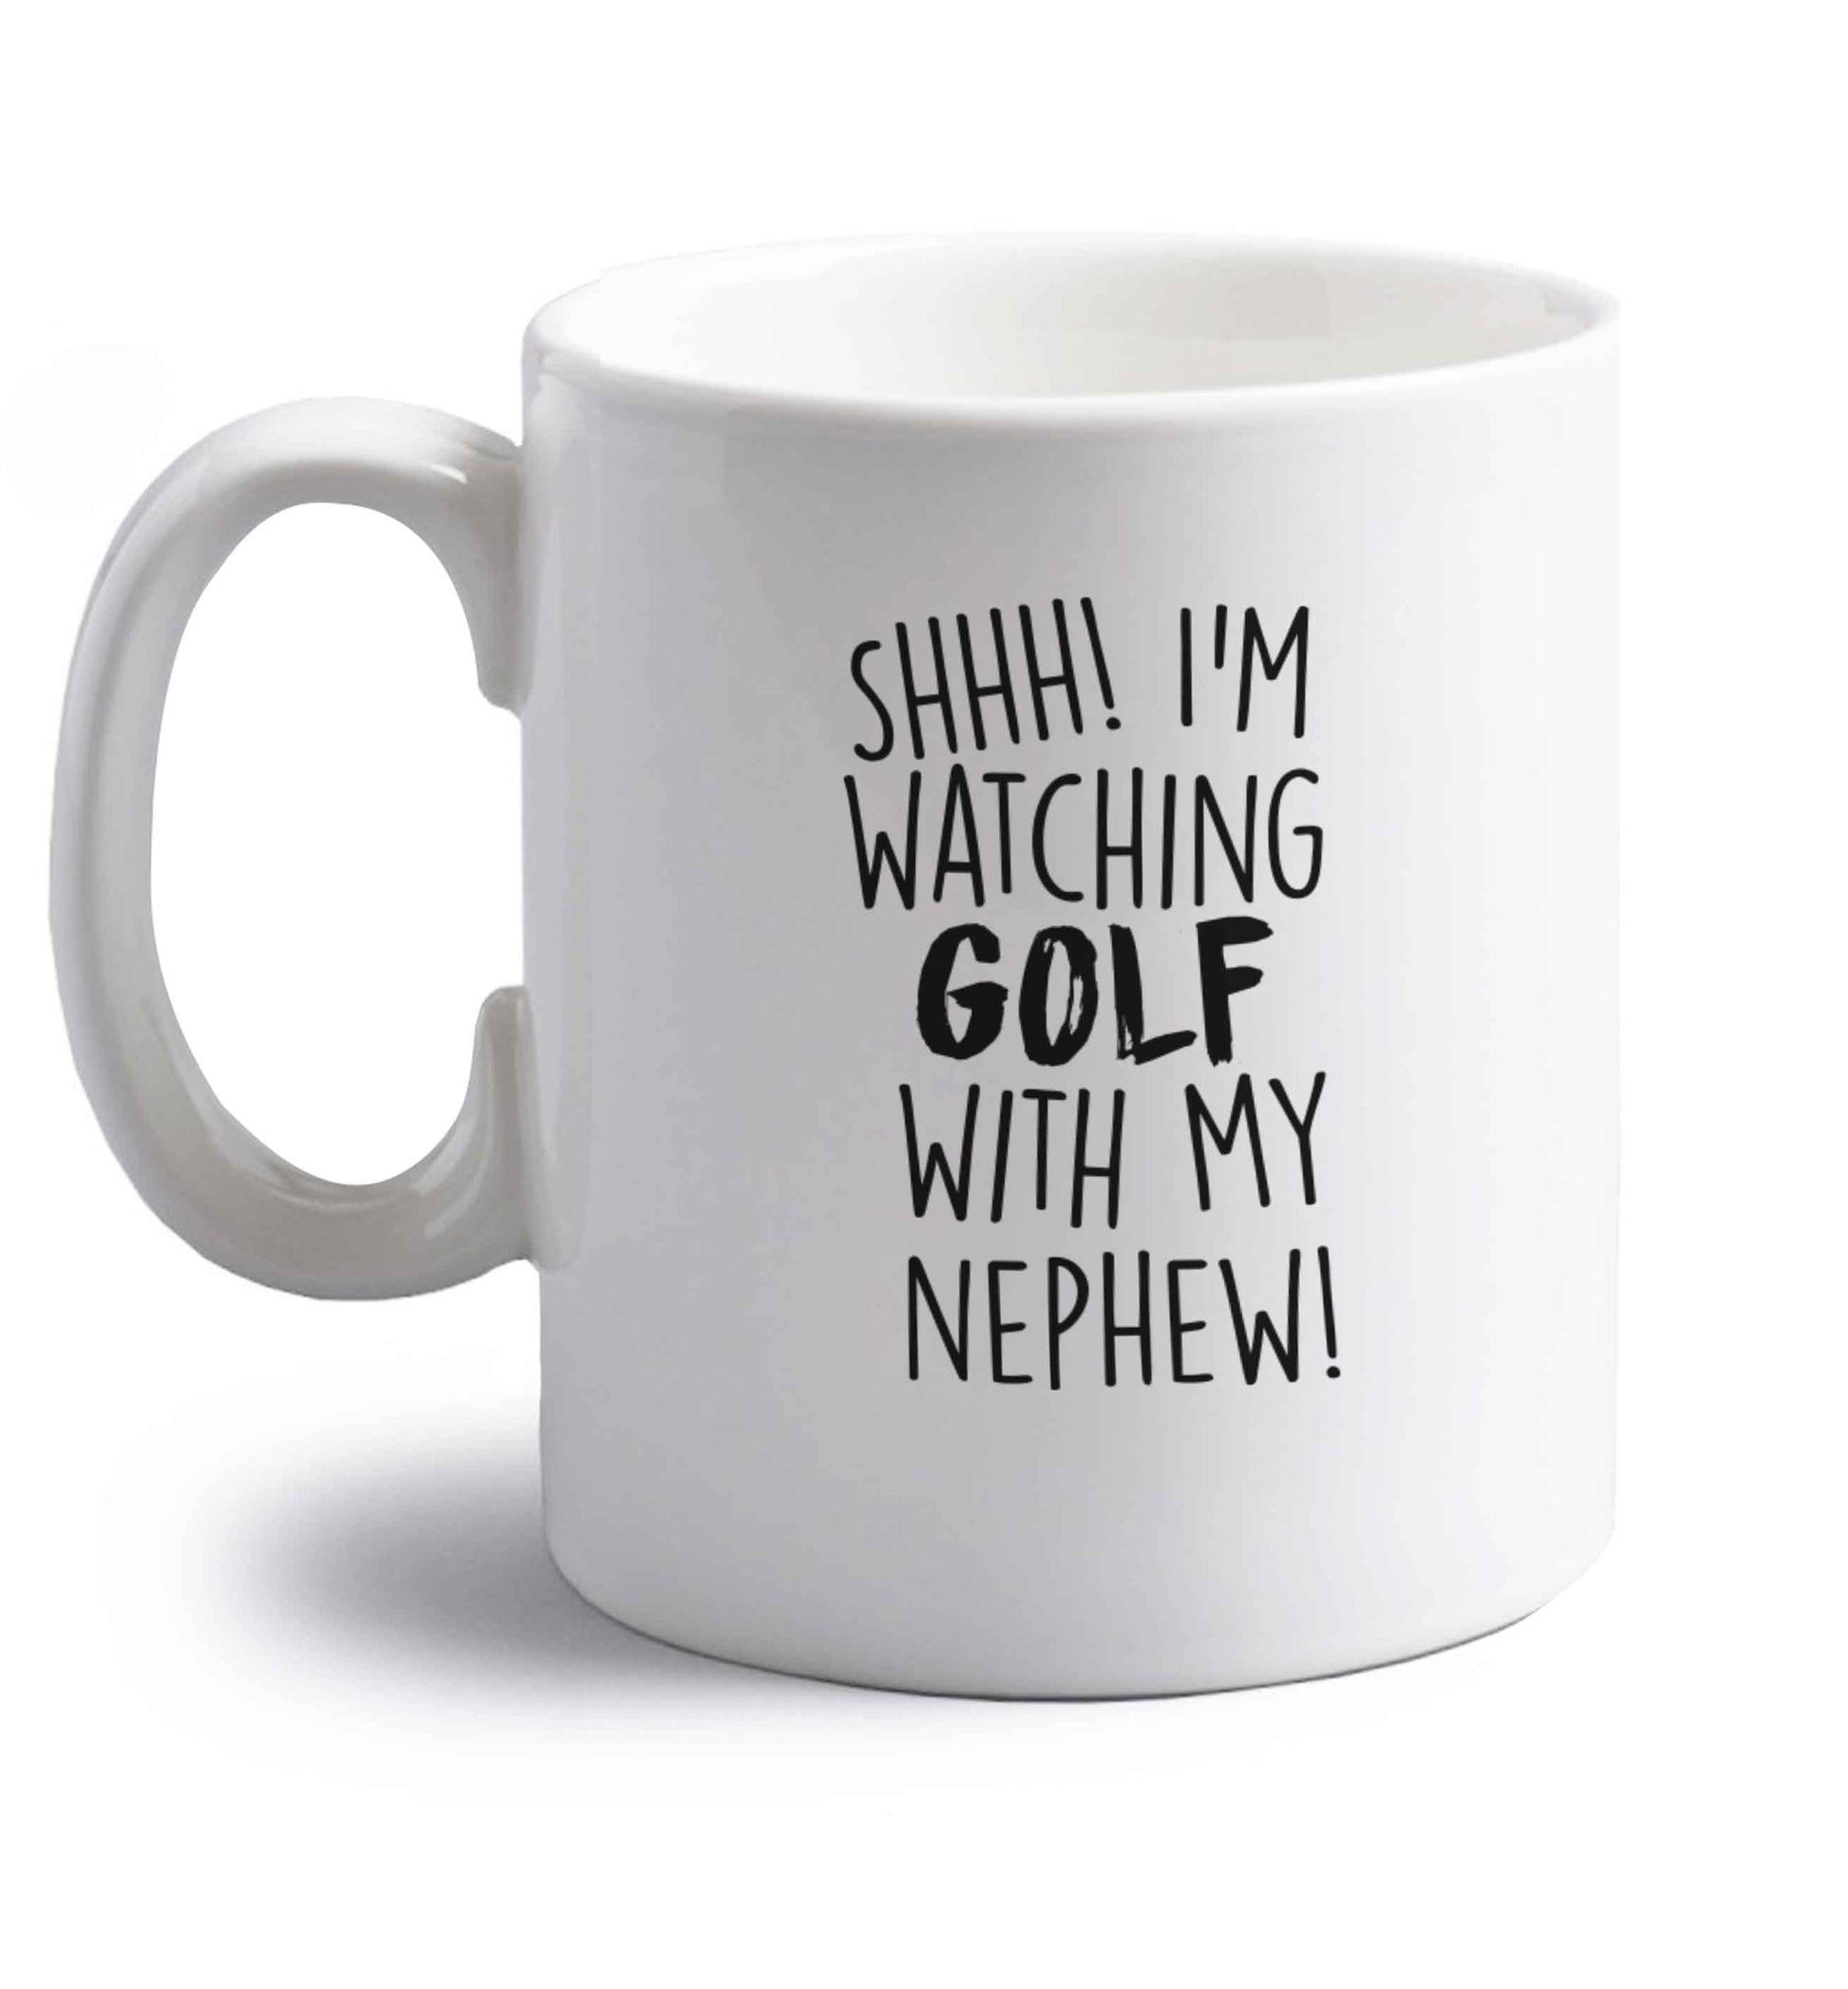 Shh I'm watching golf with my nephew right handed white ceramic mug 